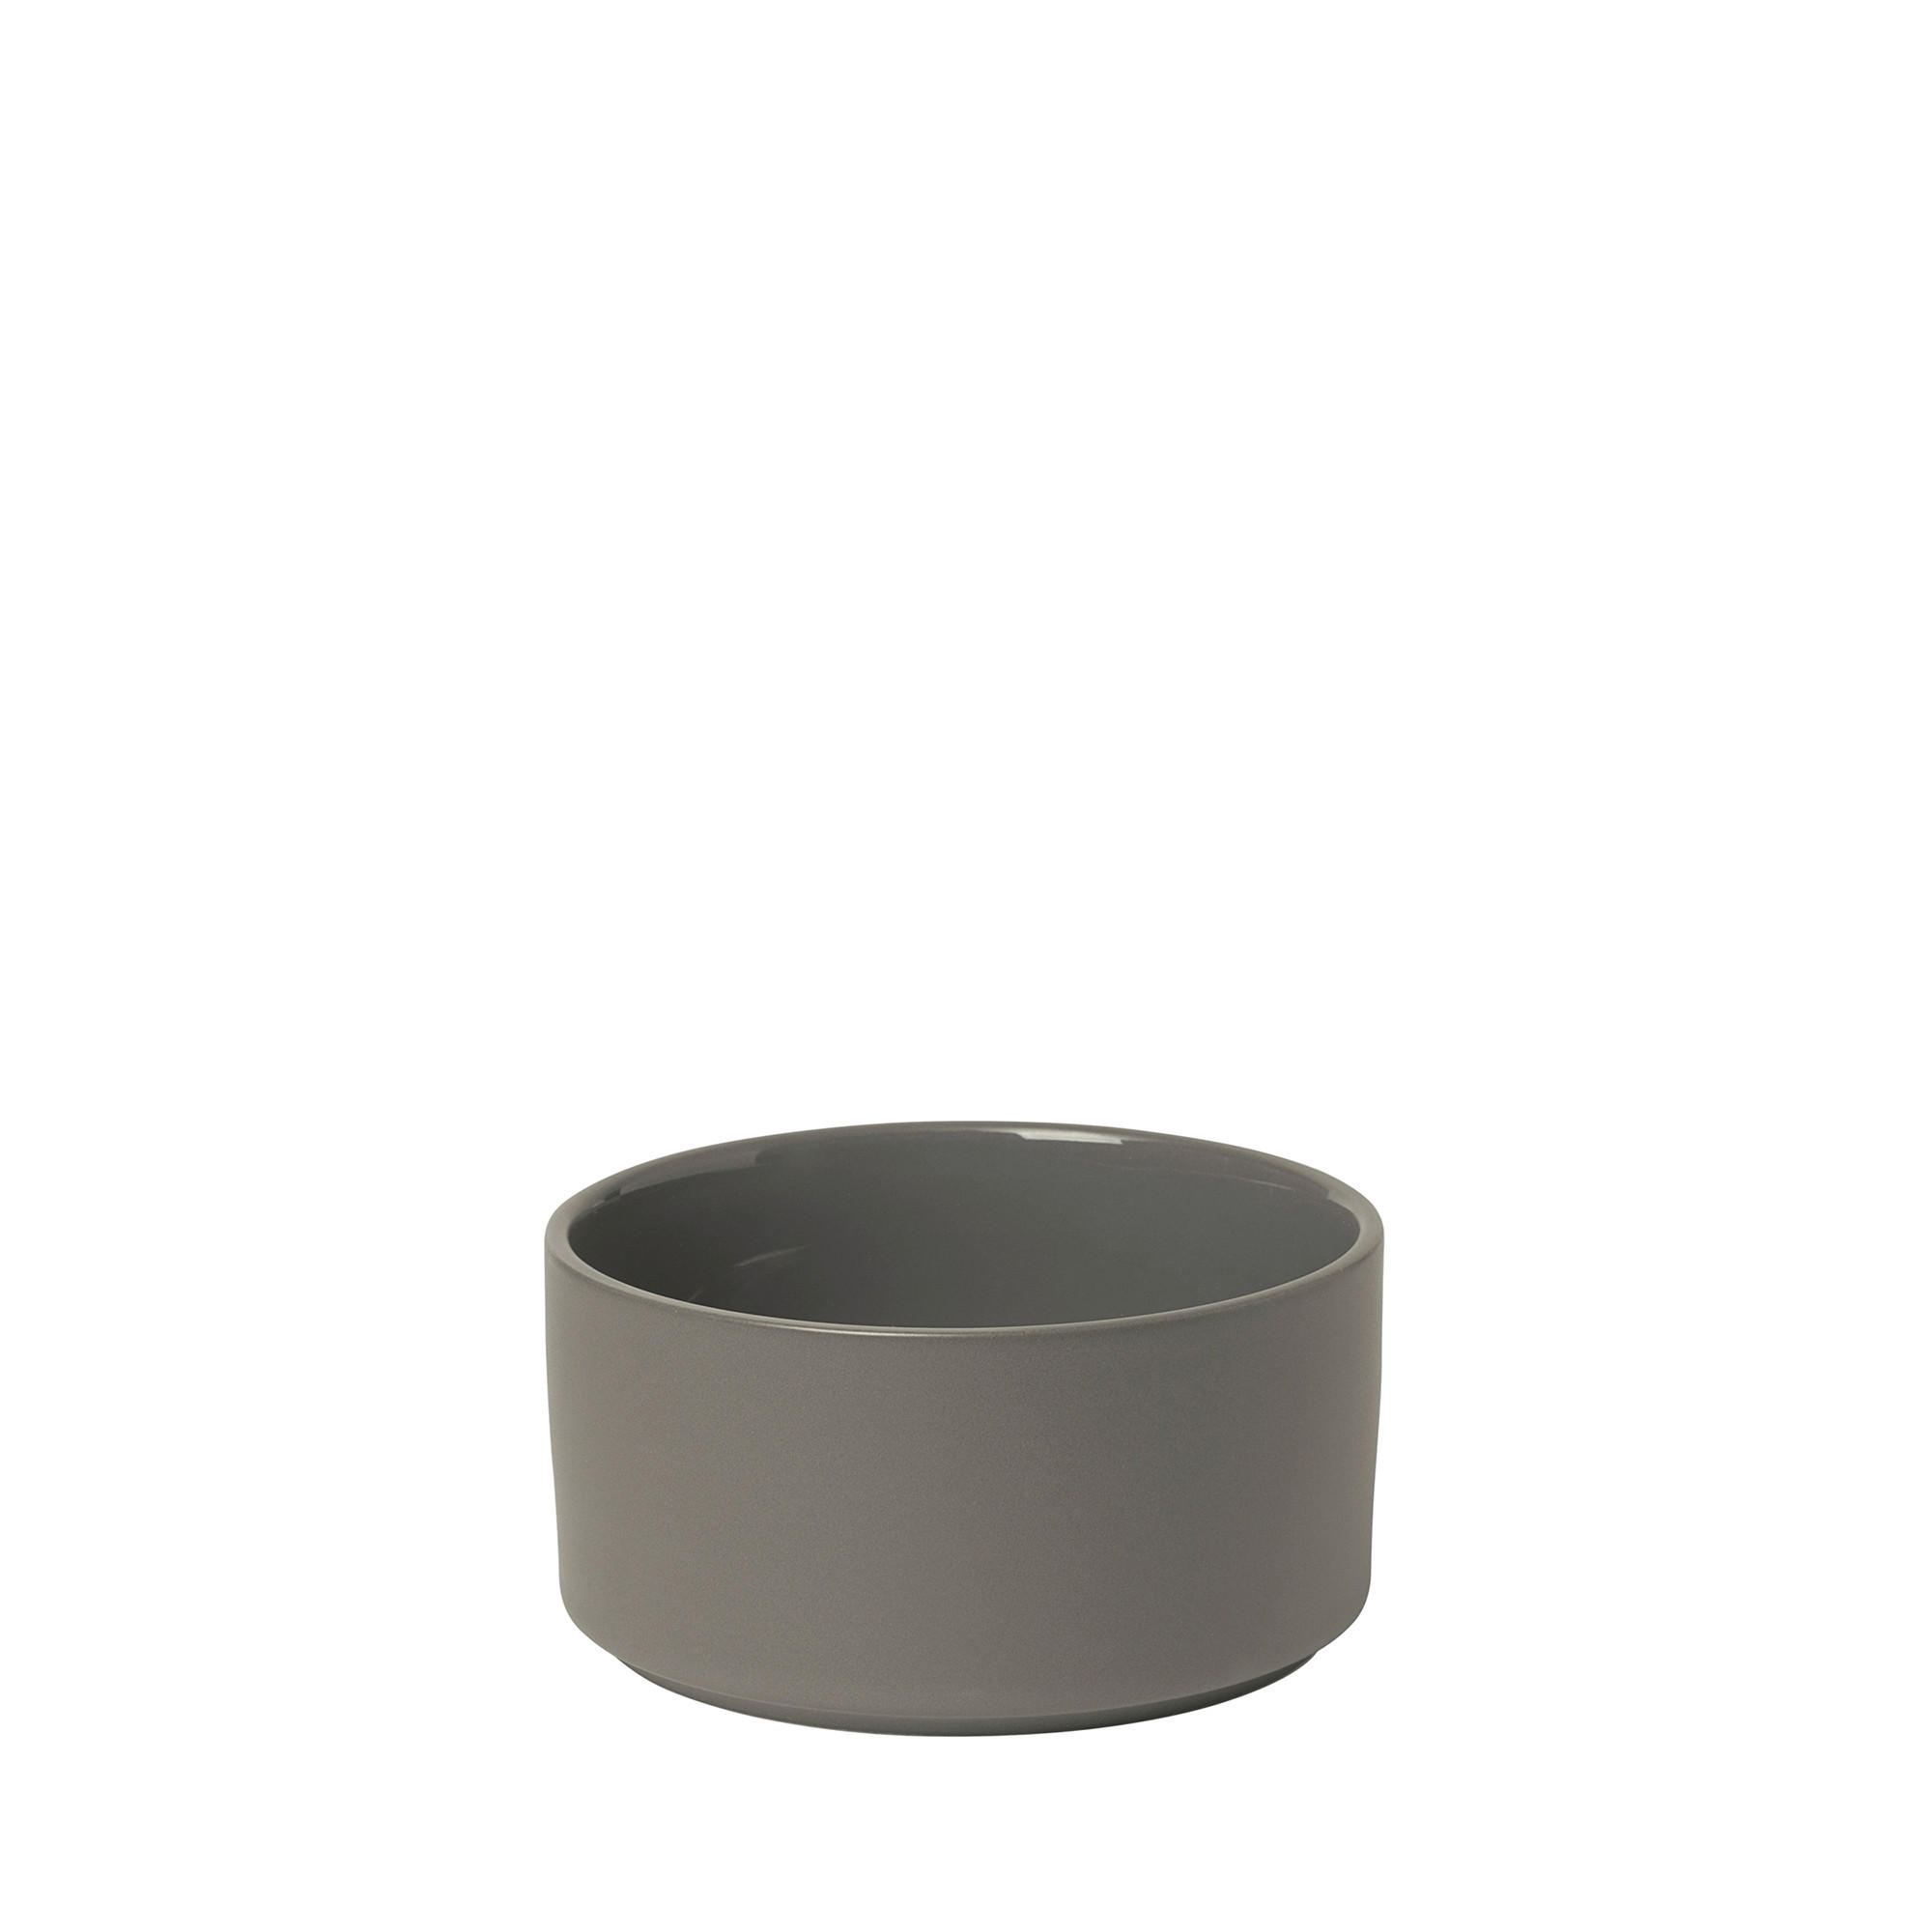 SCHALE Pilar  - Dunkelgrau, Design, Keramik (14/7cm) - Blomus